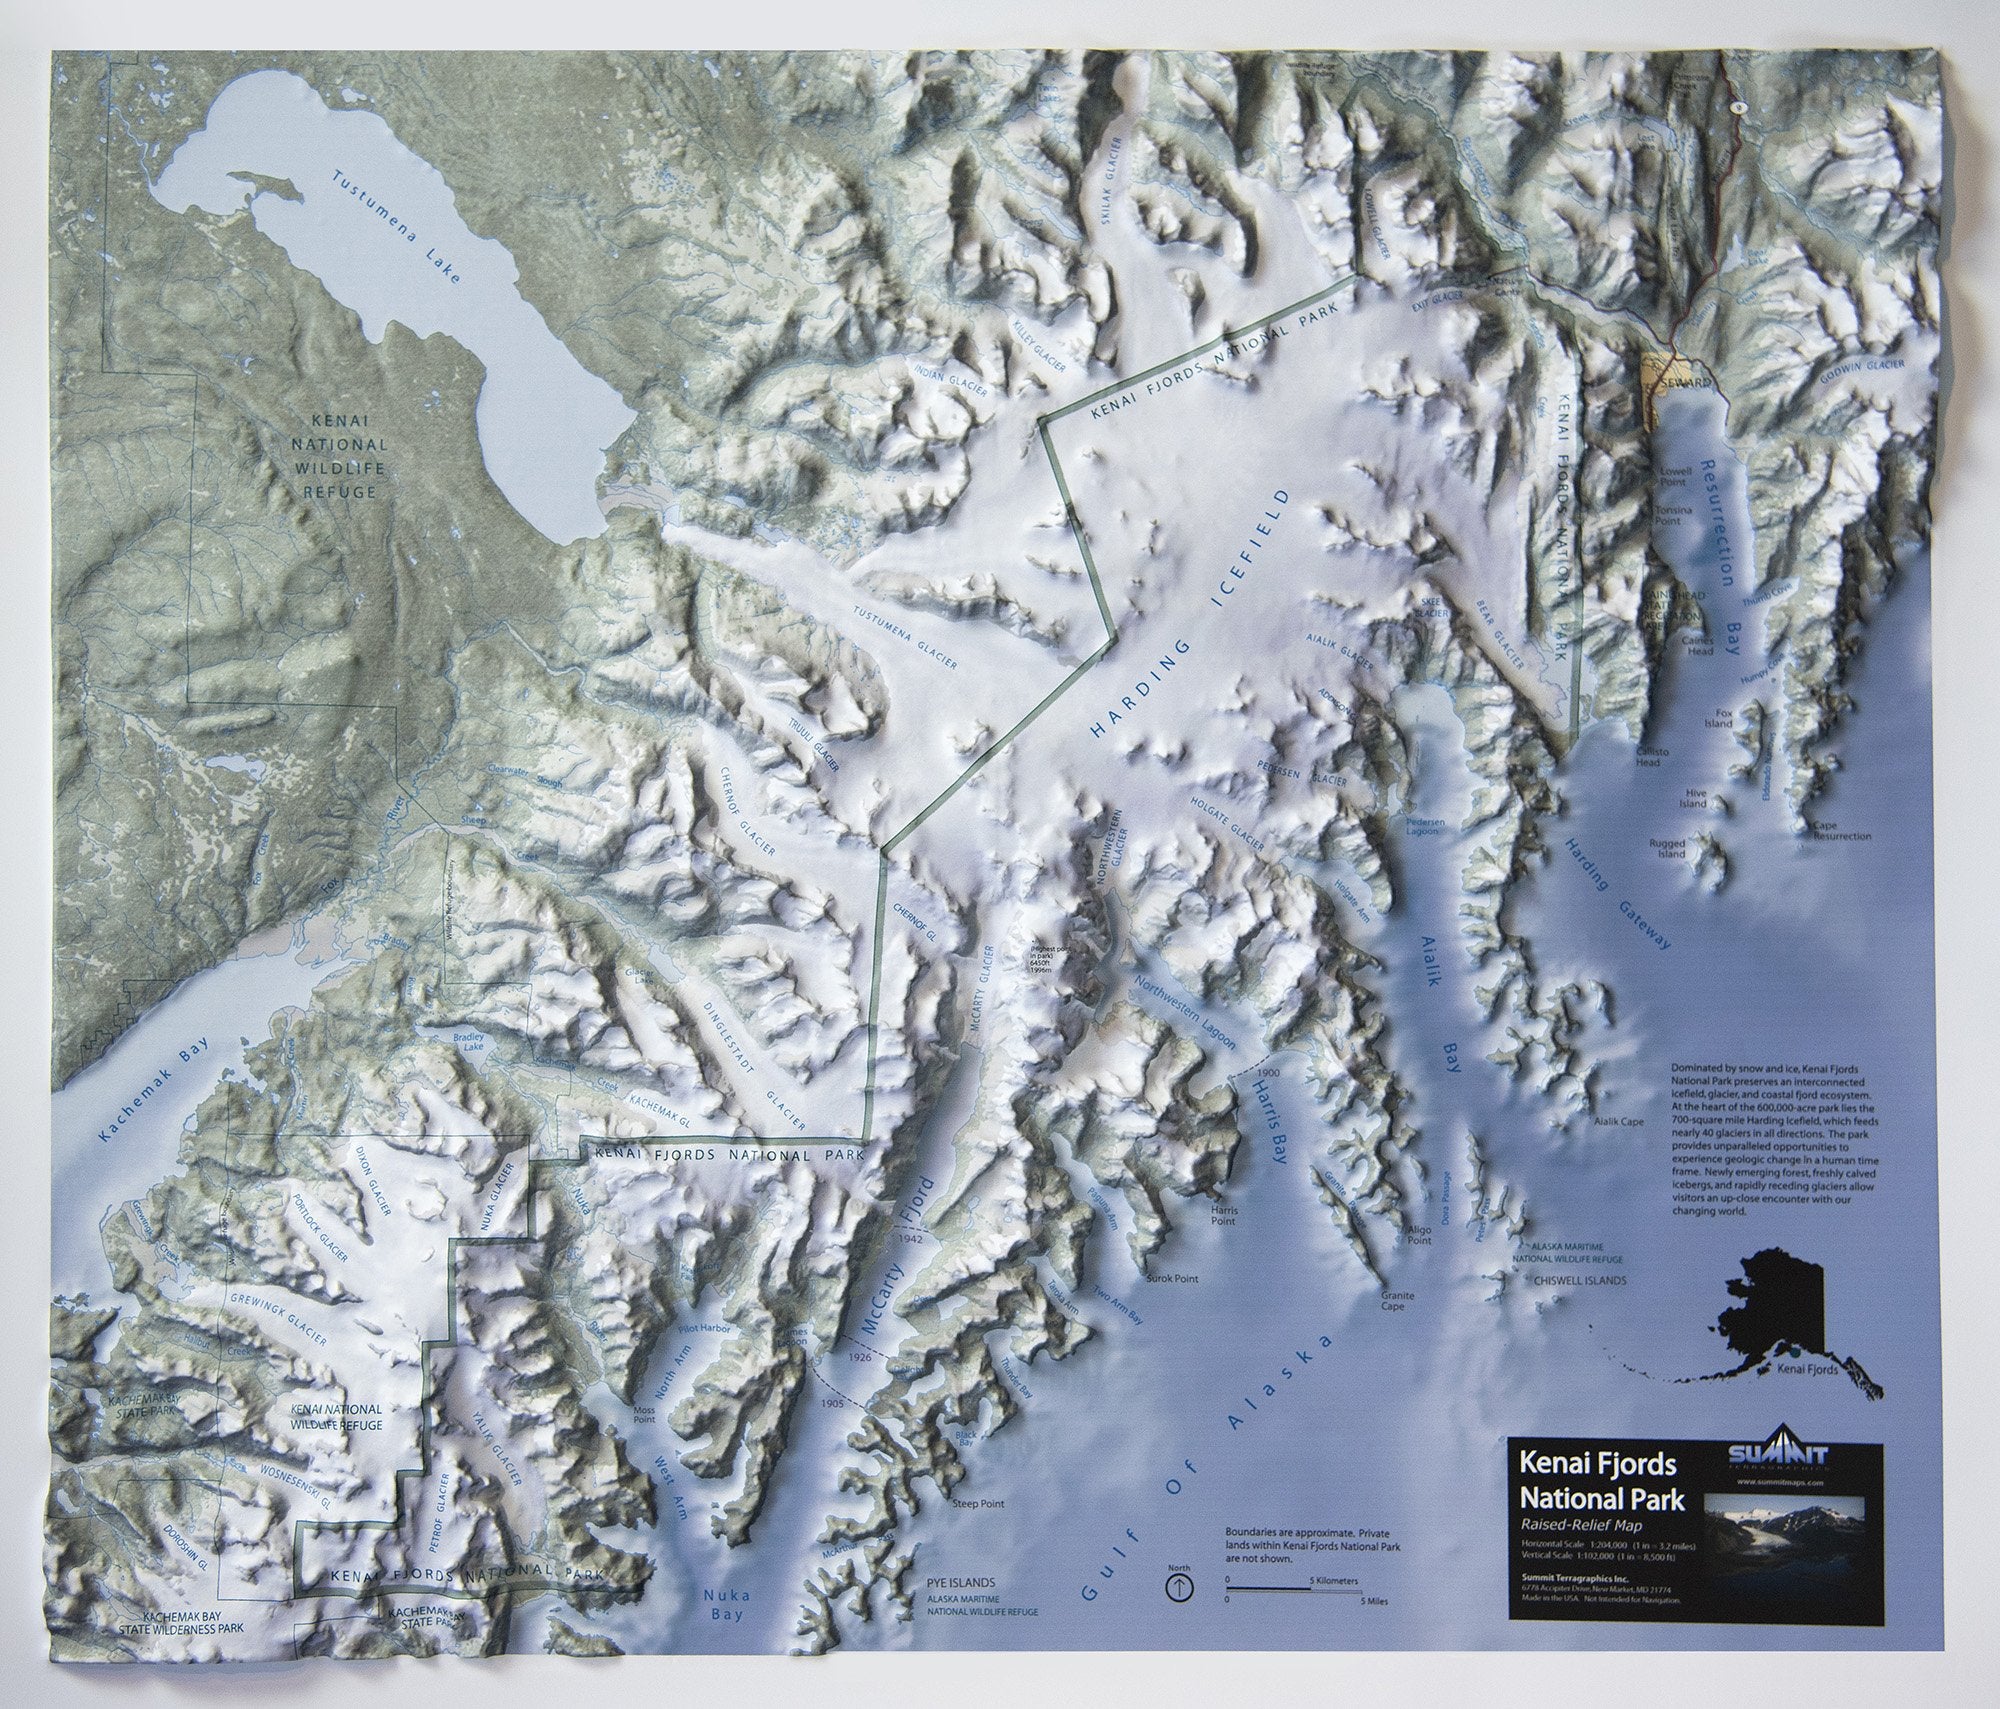 Kenai Fjords National Park Three Dimensional 3D Raised Relief Map